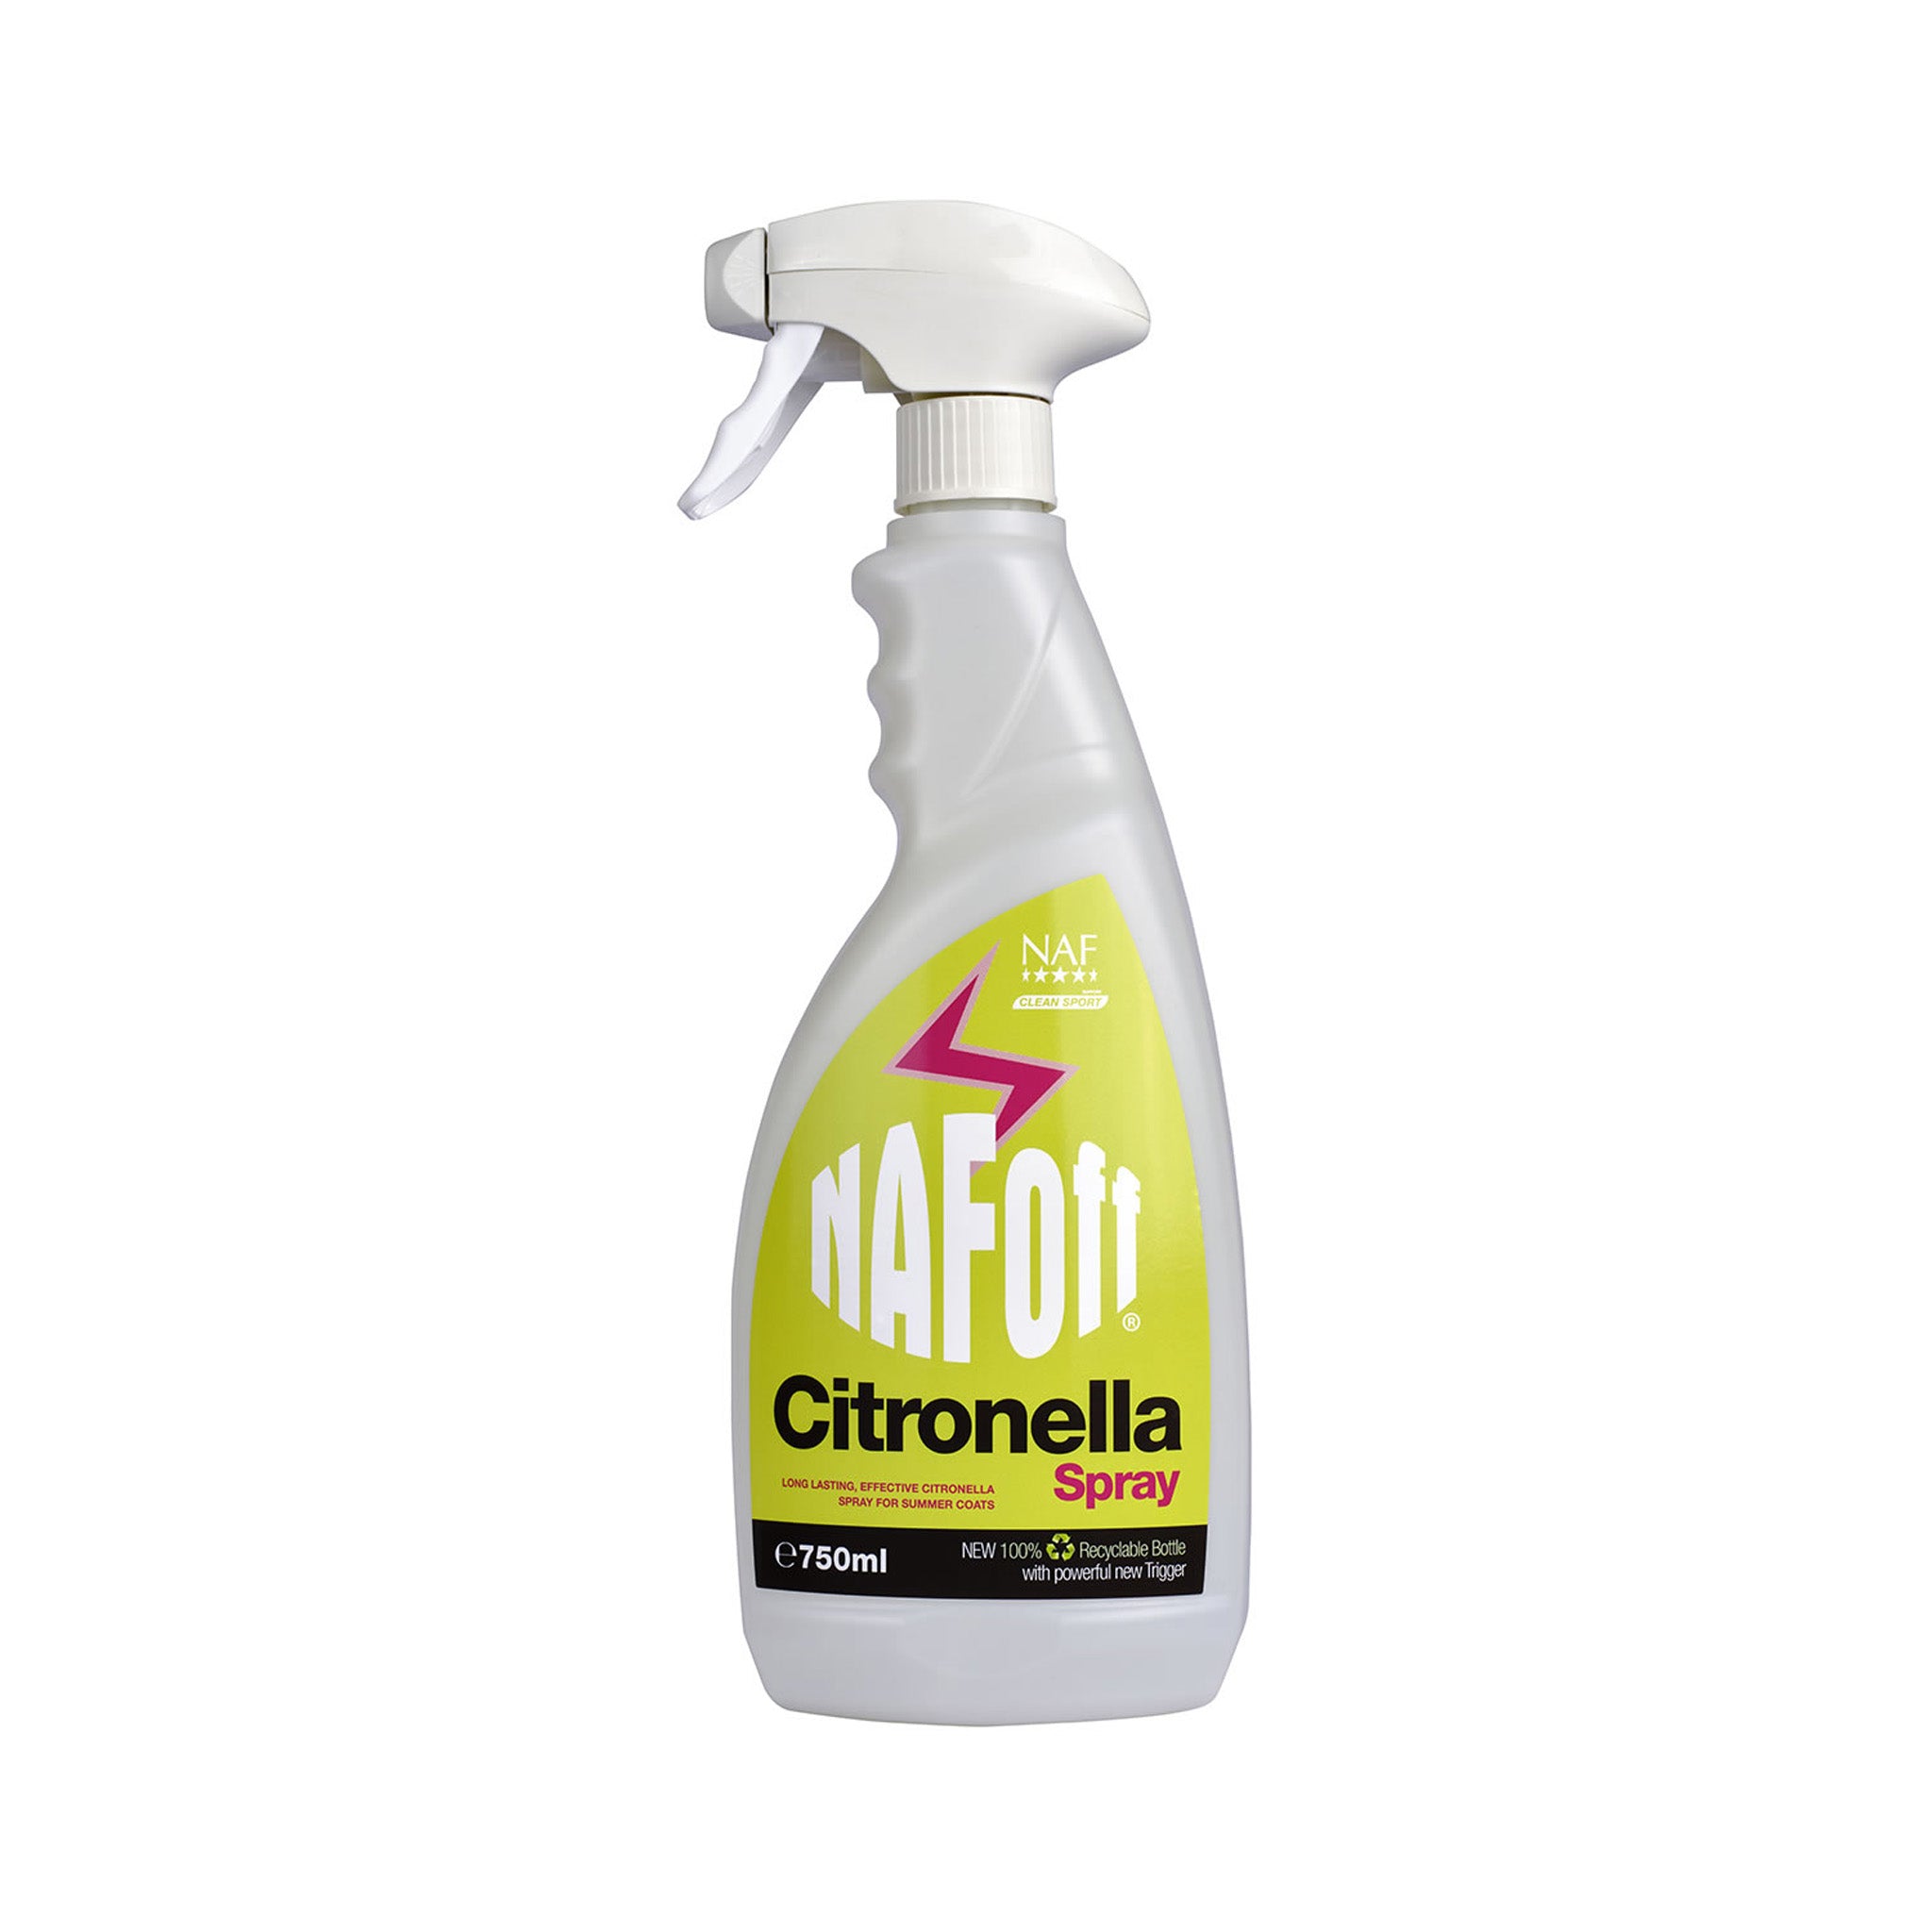 NAF Off Citronella Spray 750ml NLF1350